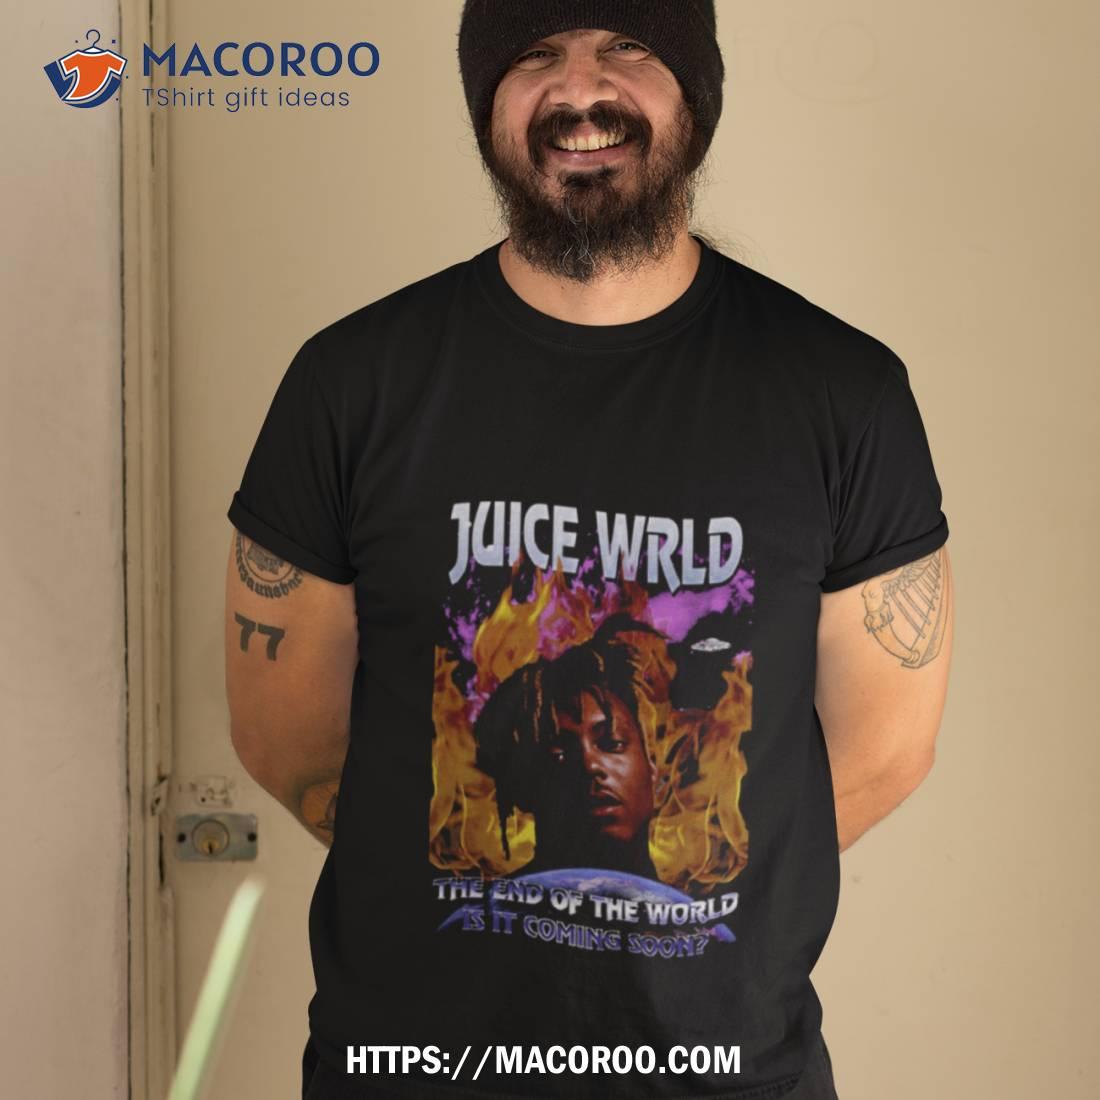 Legends Never Die - Juice WRLD T-shirt